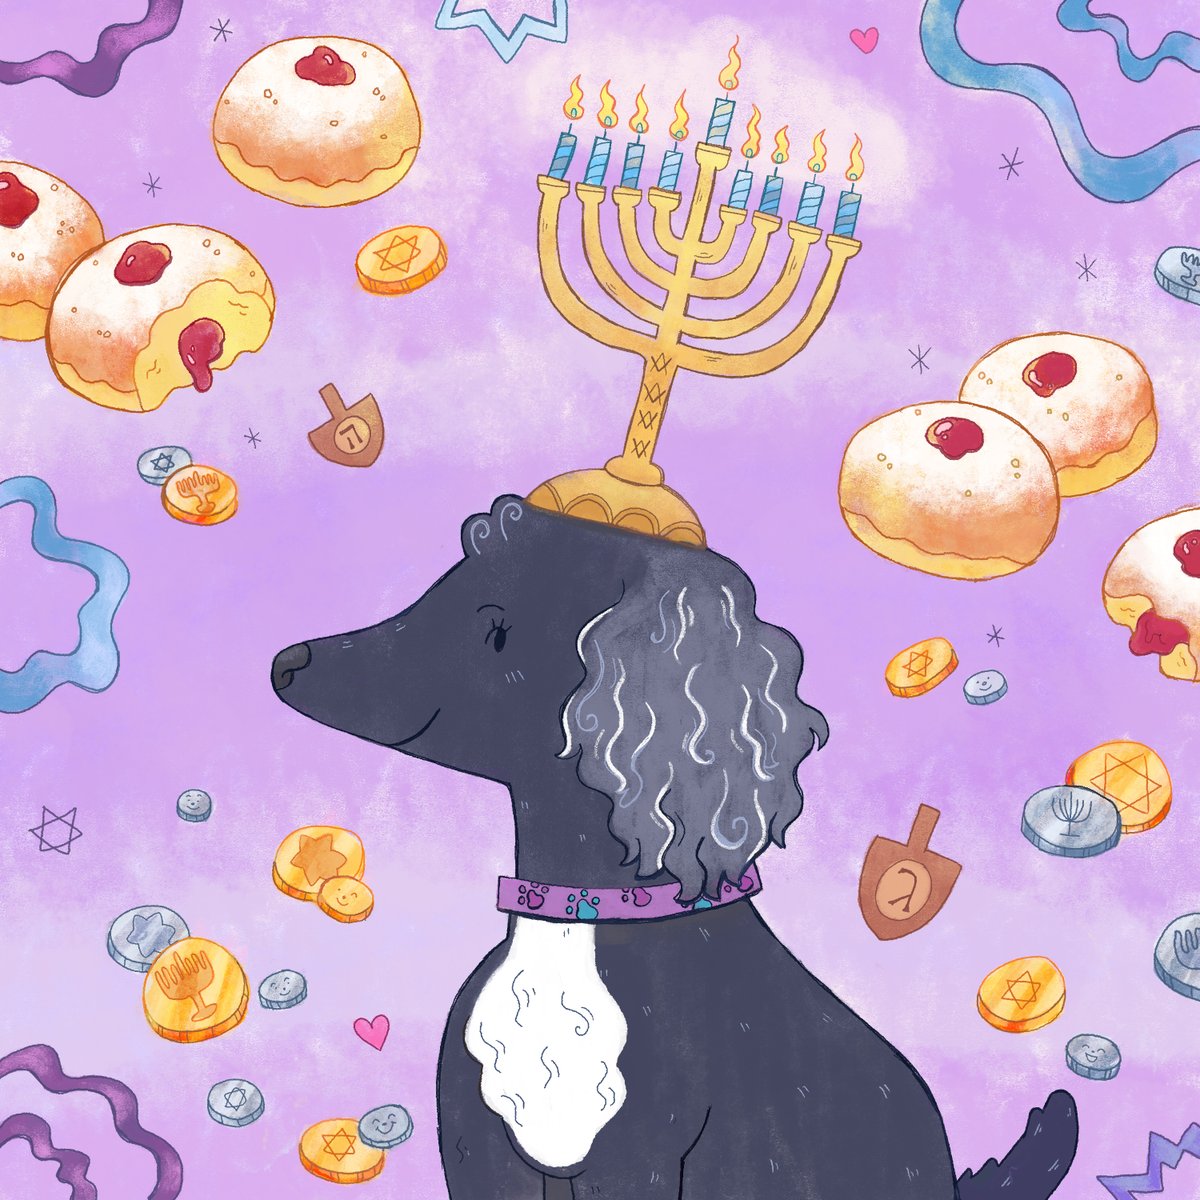 Wishing those who celebrate a happy Hanukkah! #HappyHanukkah #jewishartists